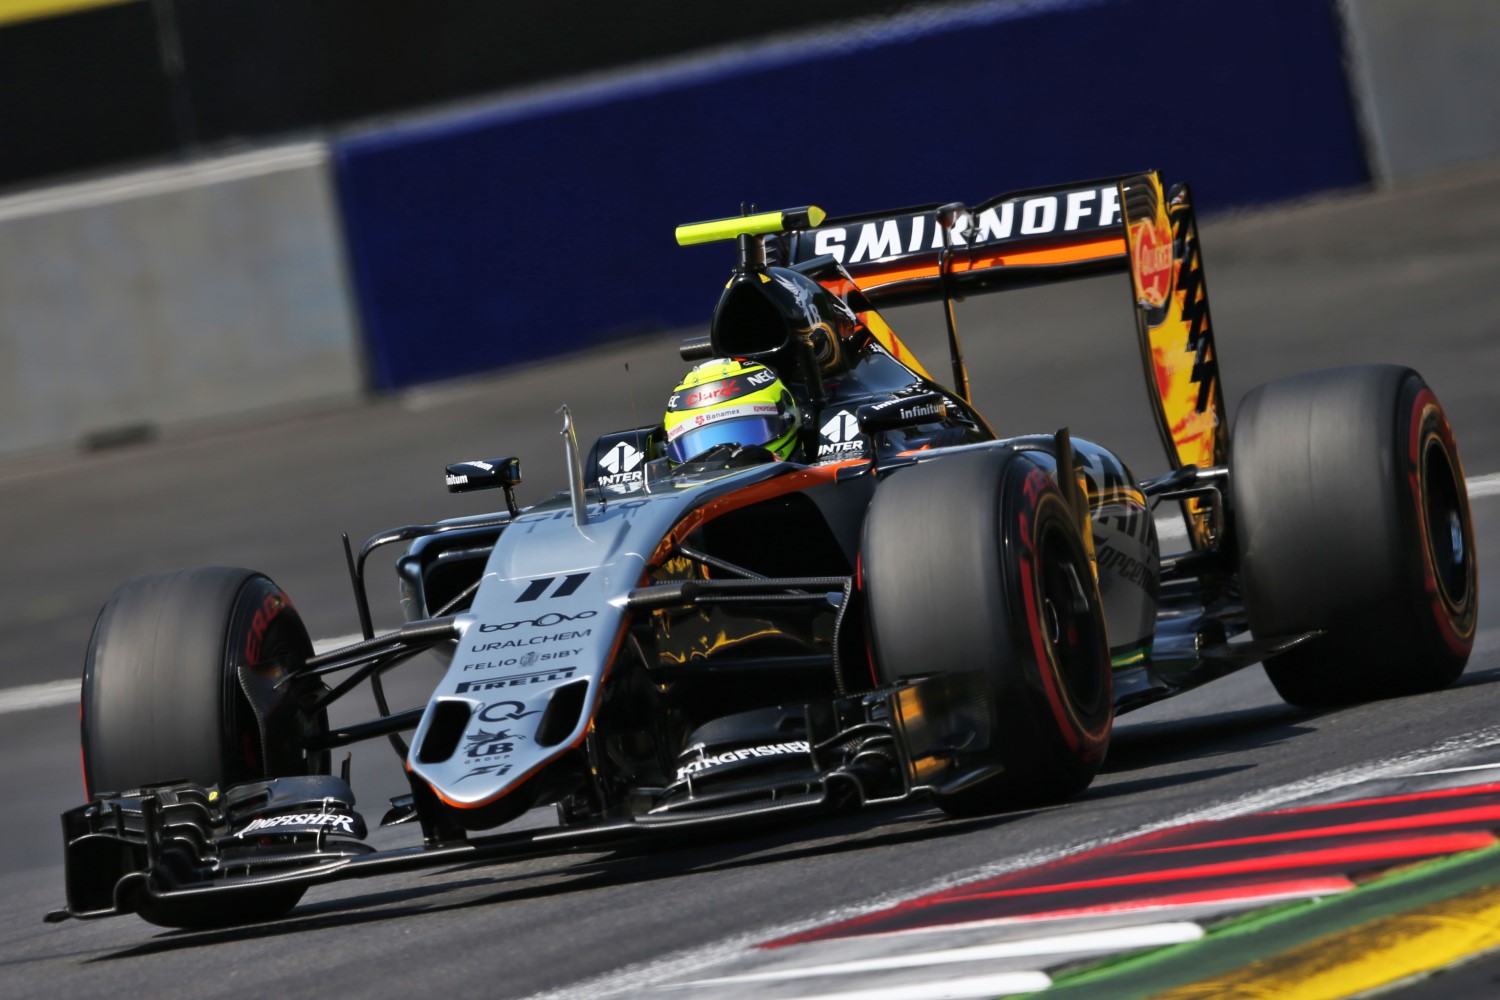 Will Sergio Perez take his Carlos Slim money to Renault?